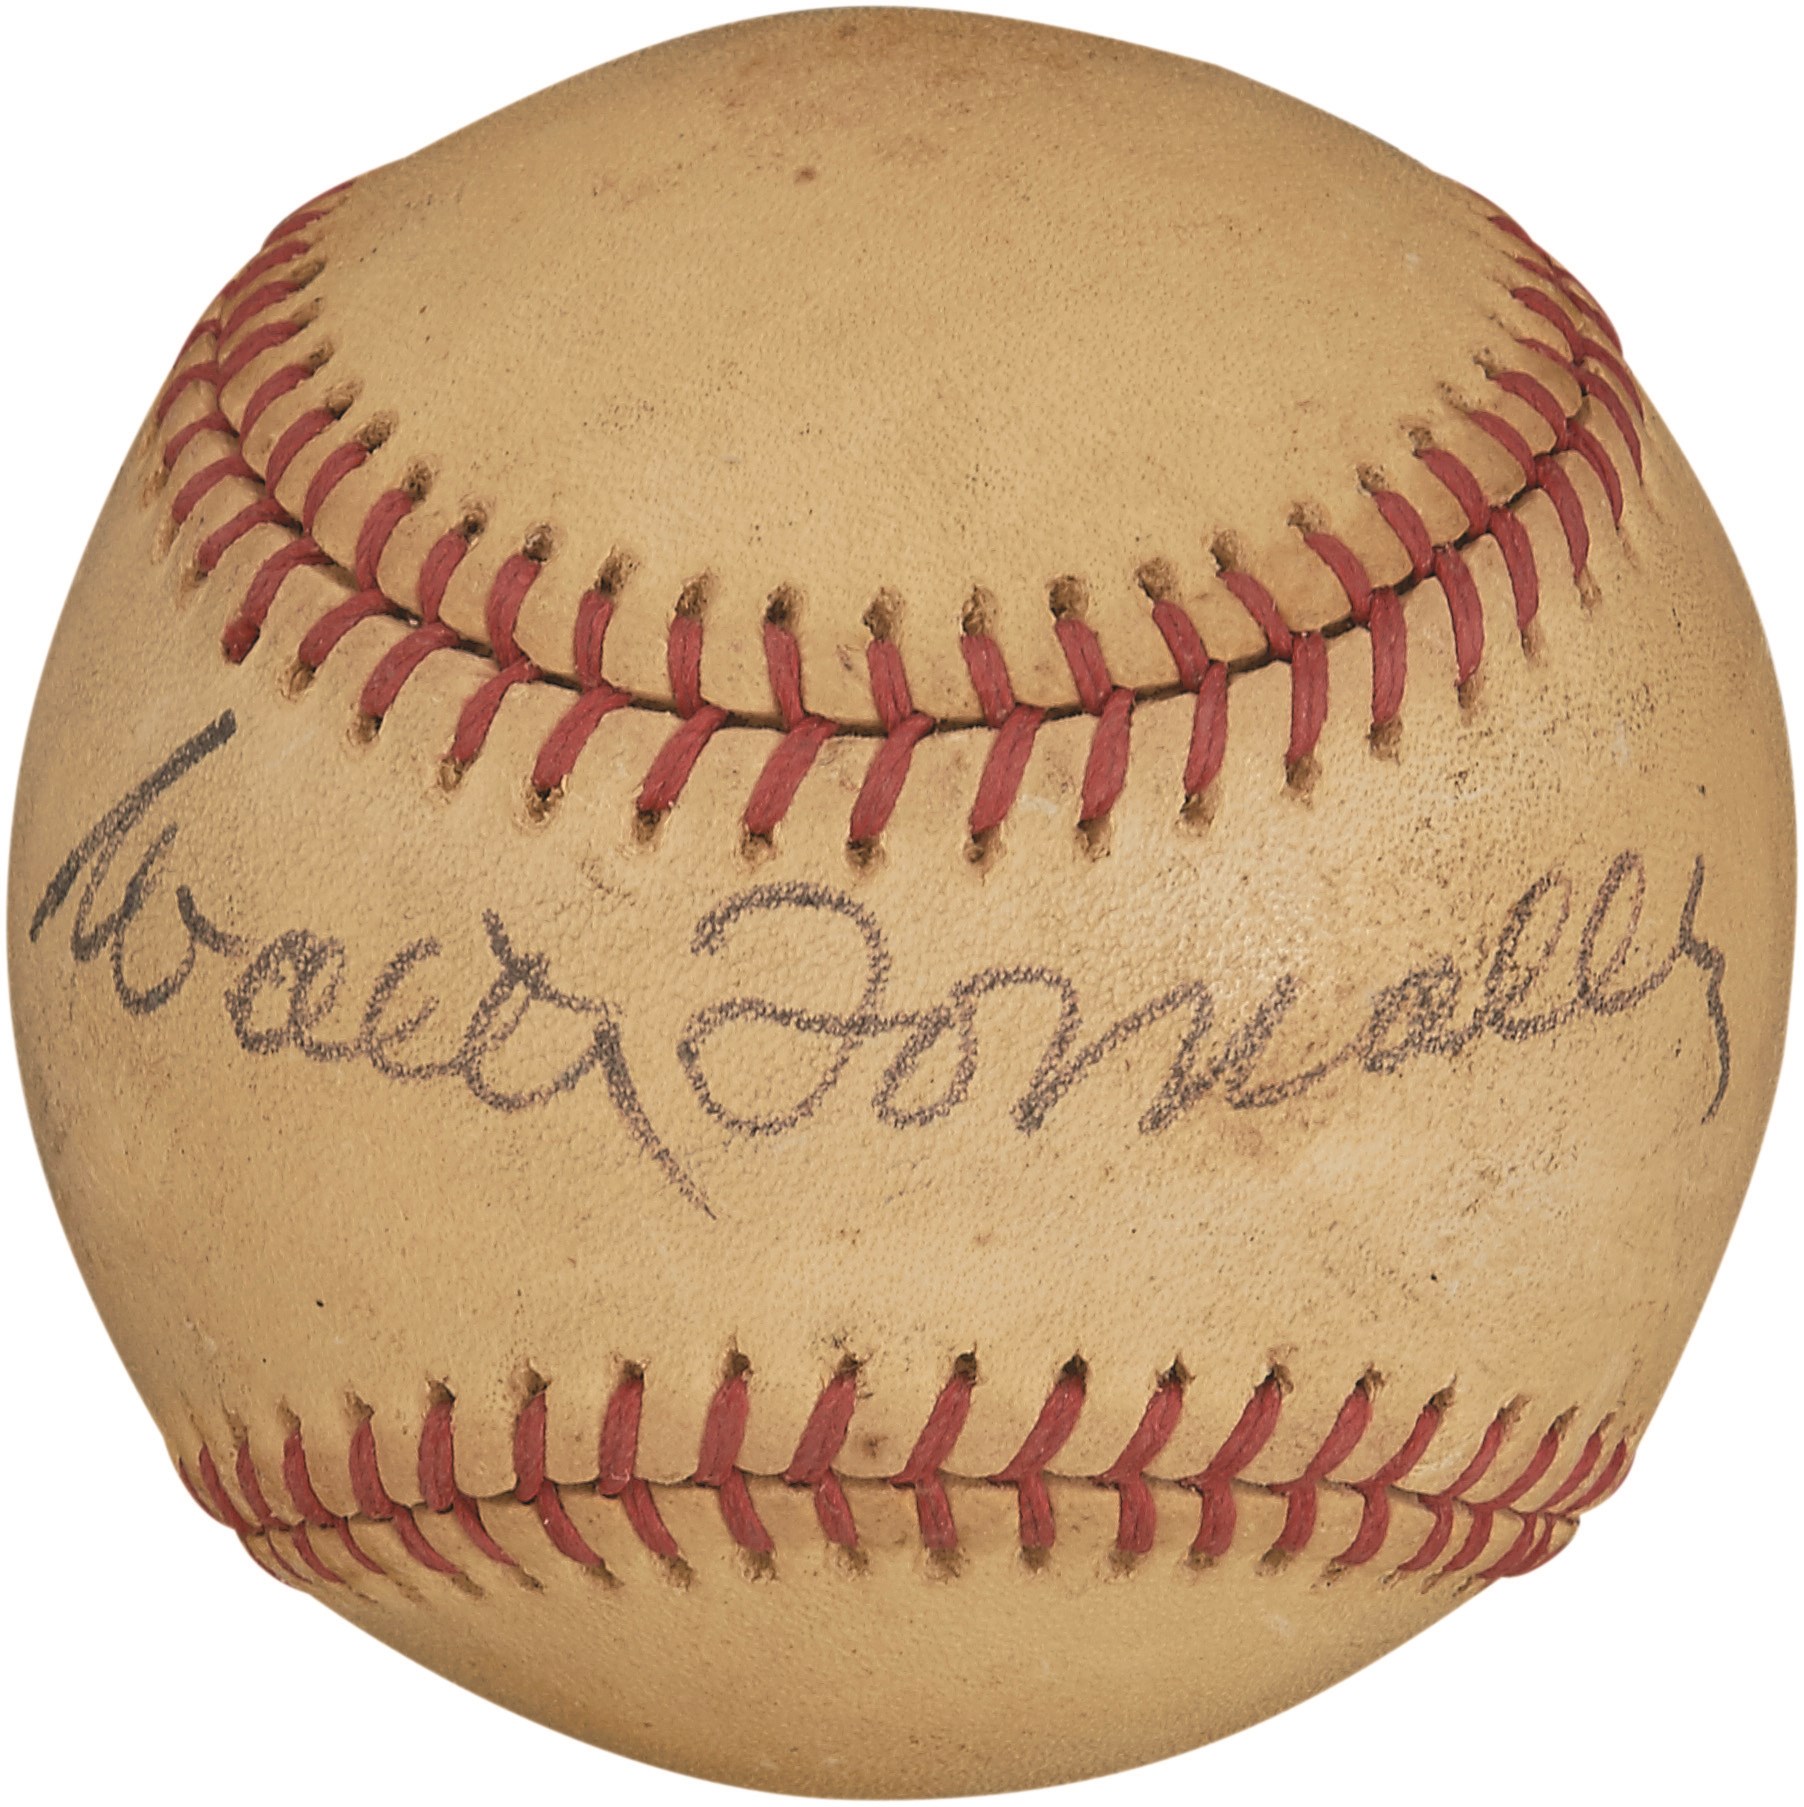 Walter O'Malley Single-Signed Baseball (PSA)